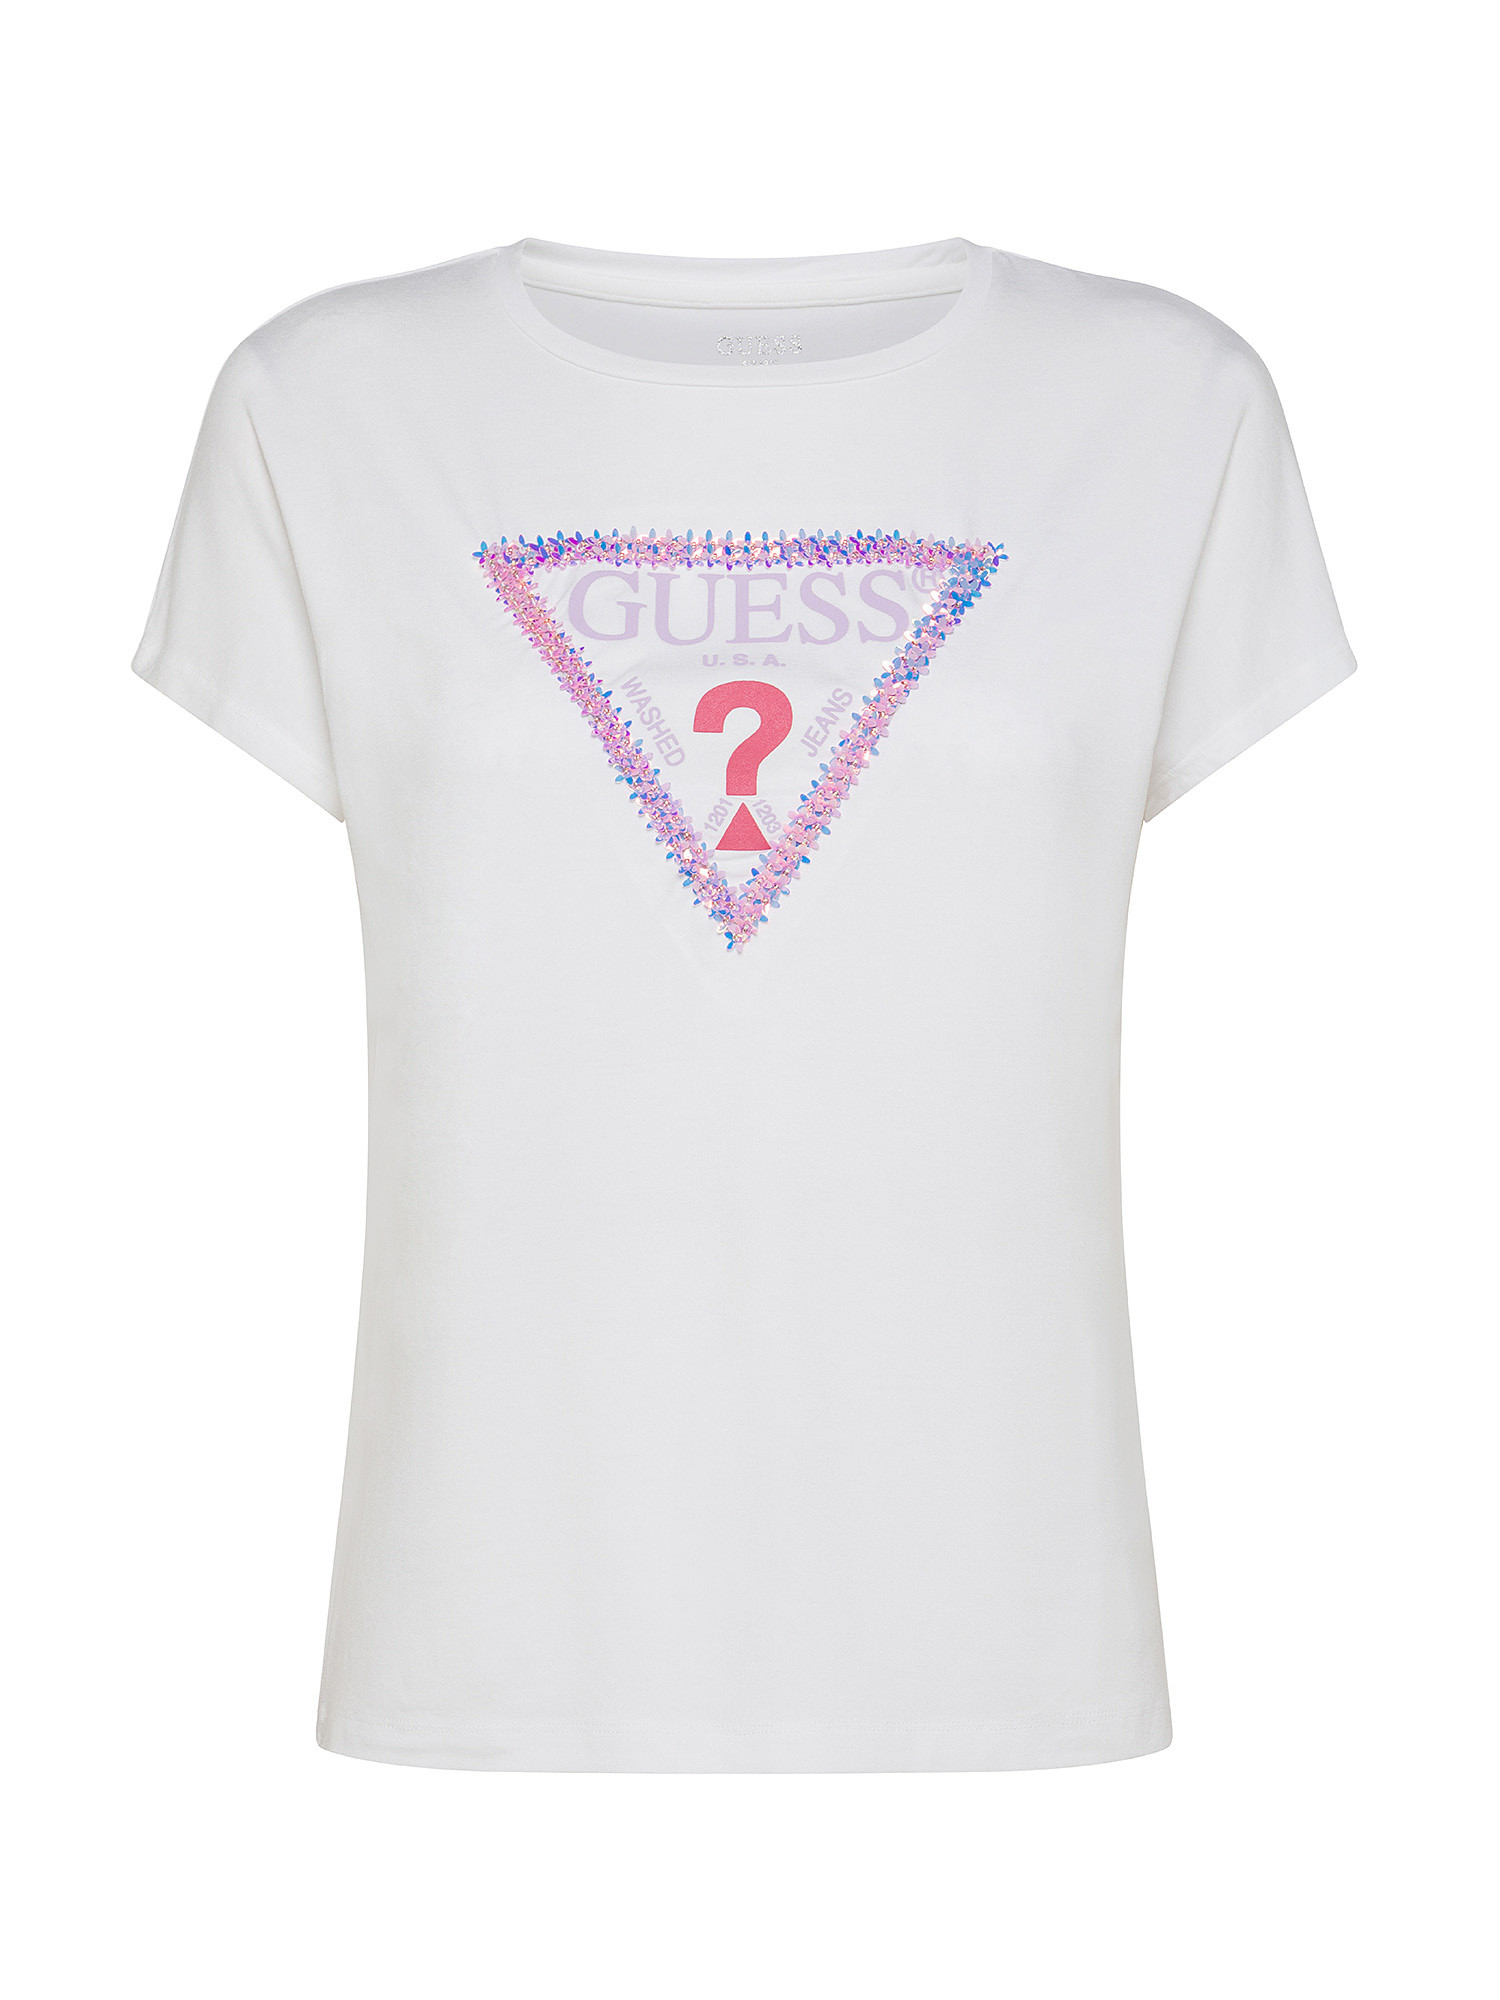 GUESS - Logo T-shirt, White, large image number 0